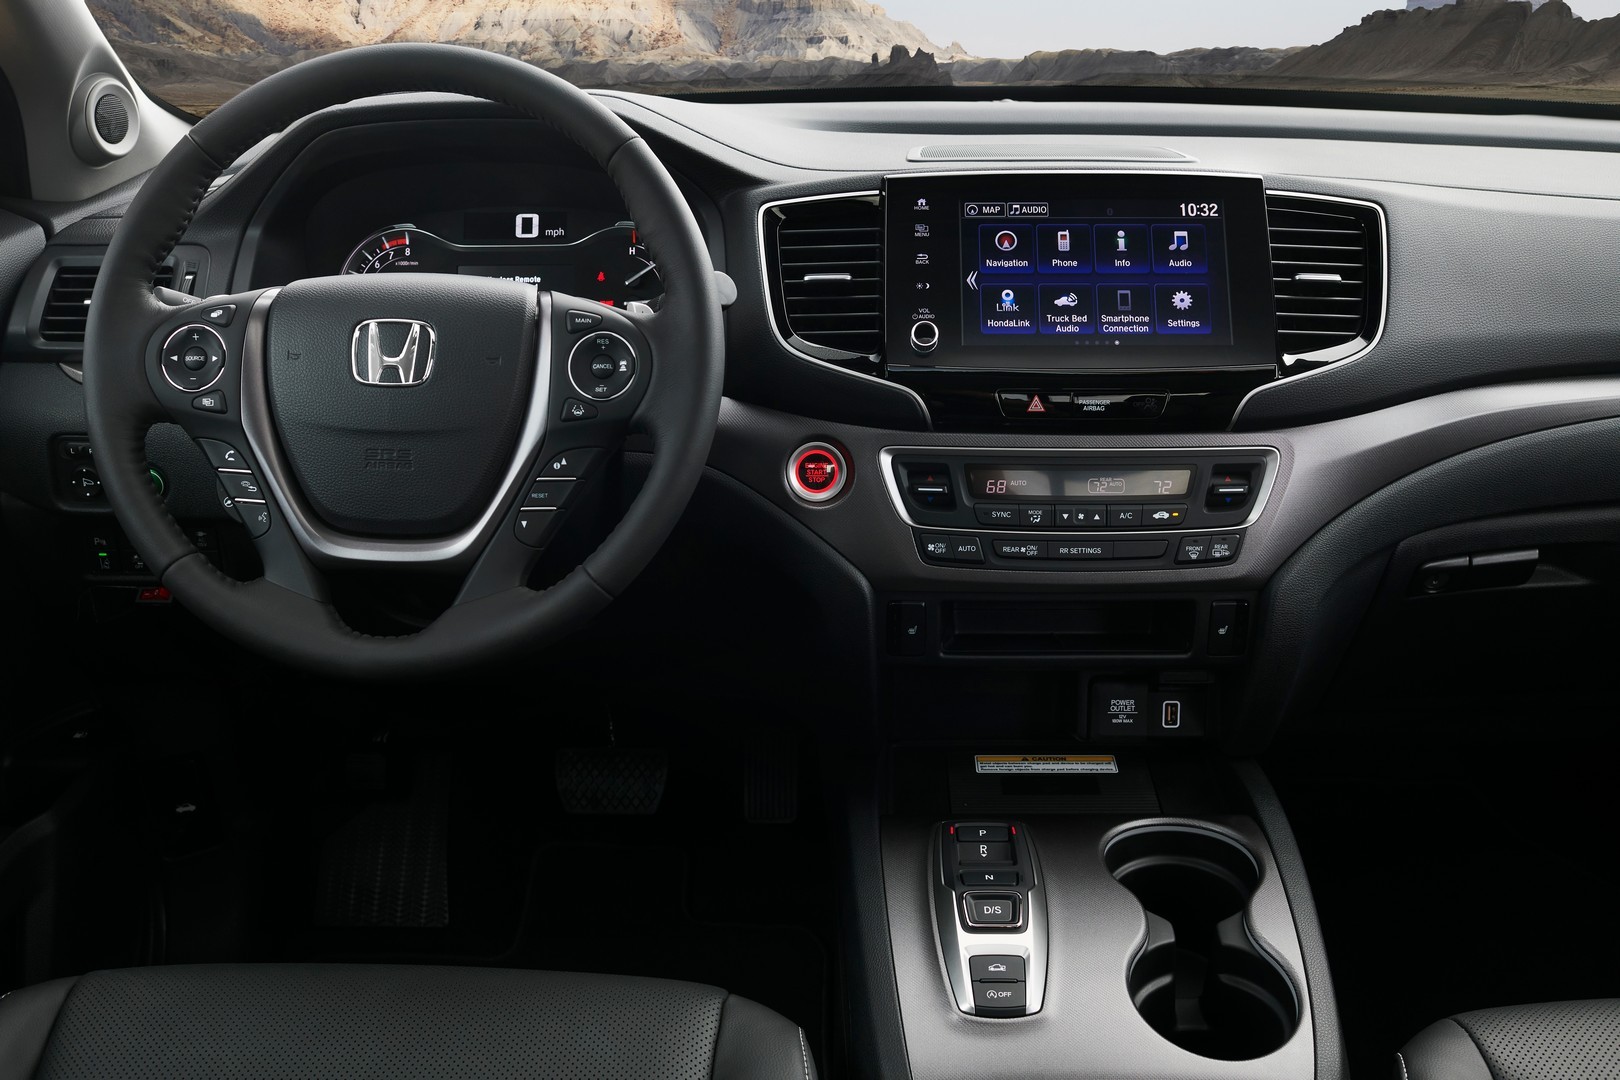 Honda Recall Steering Issue in Passport & Ridgeline 1